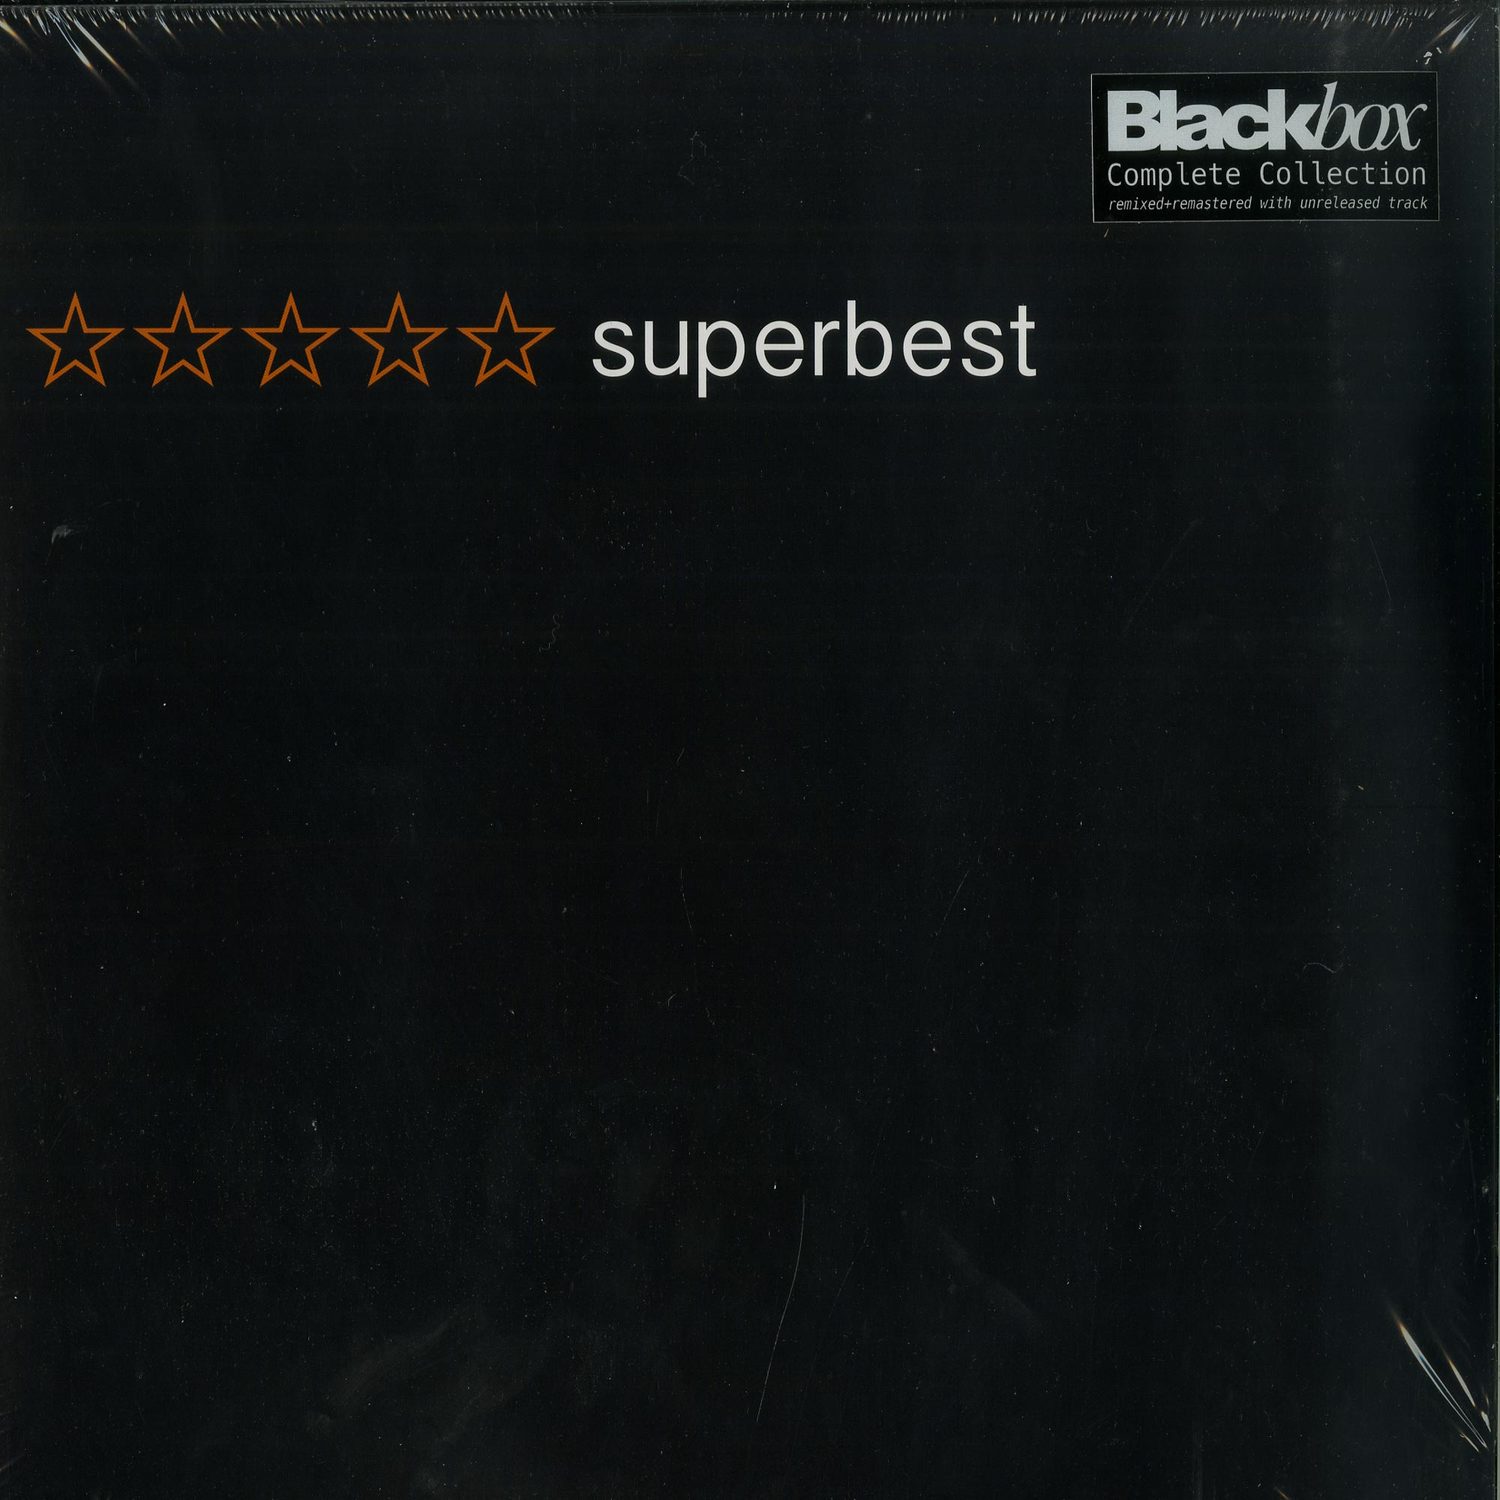 Blackbox - SUPERBEST 